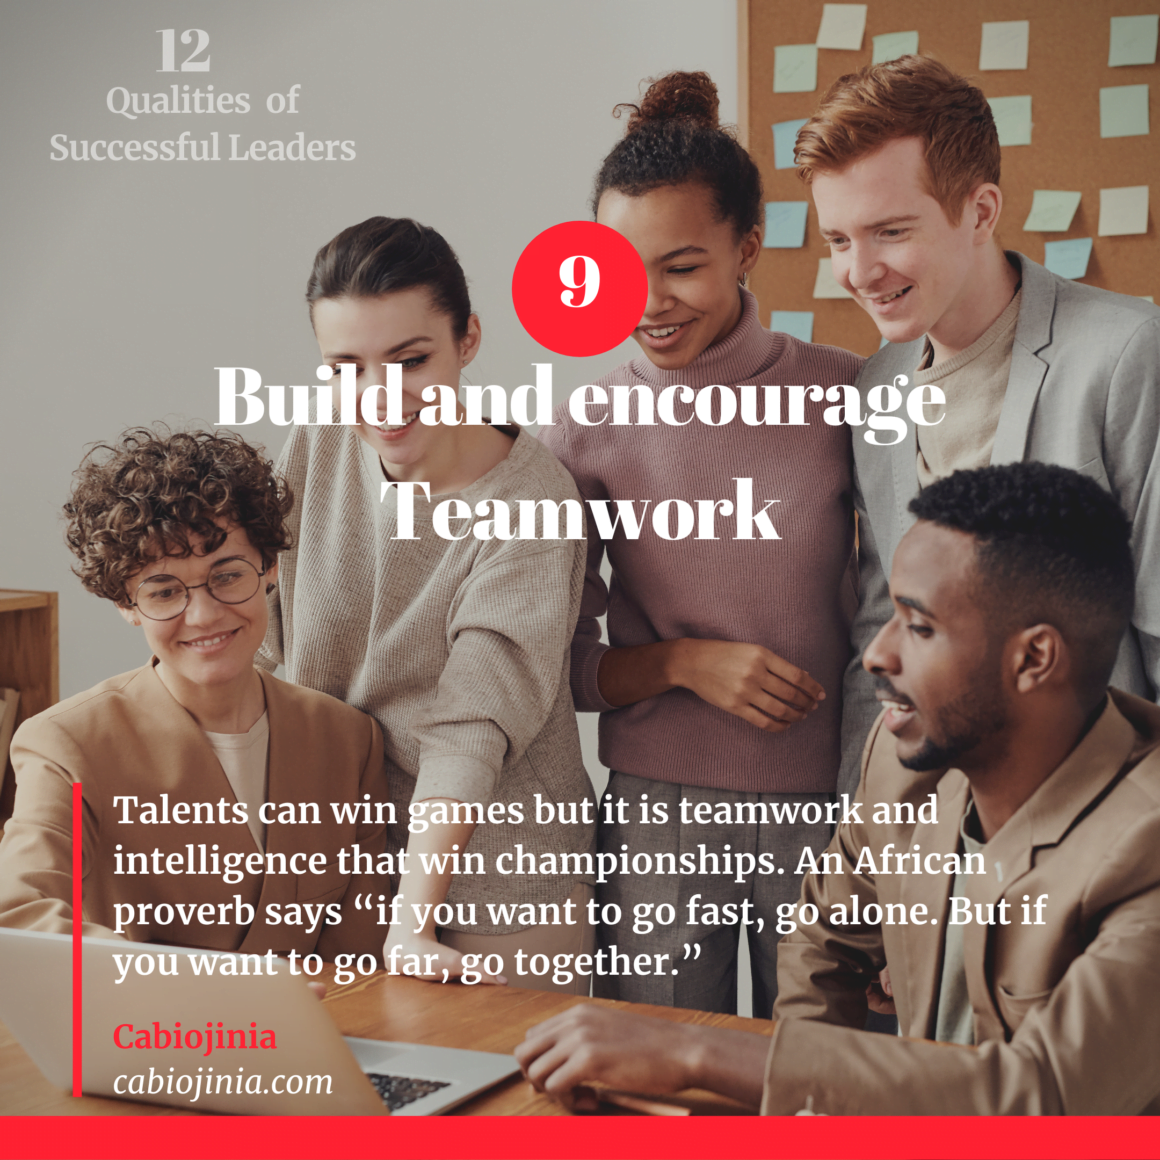 Successful leaders encourage teamwork. Cabiojinia